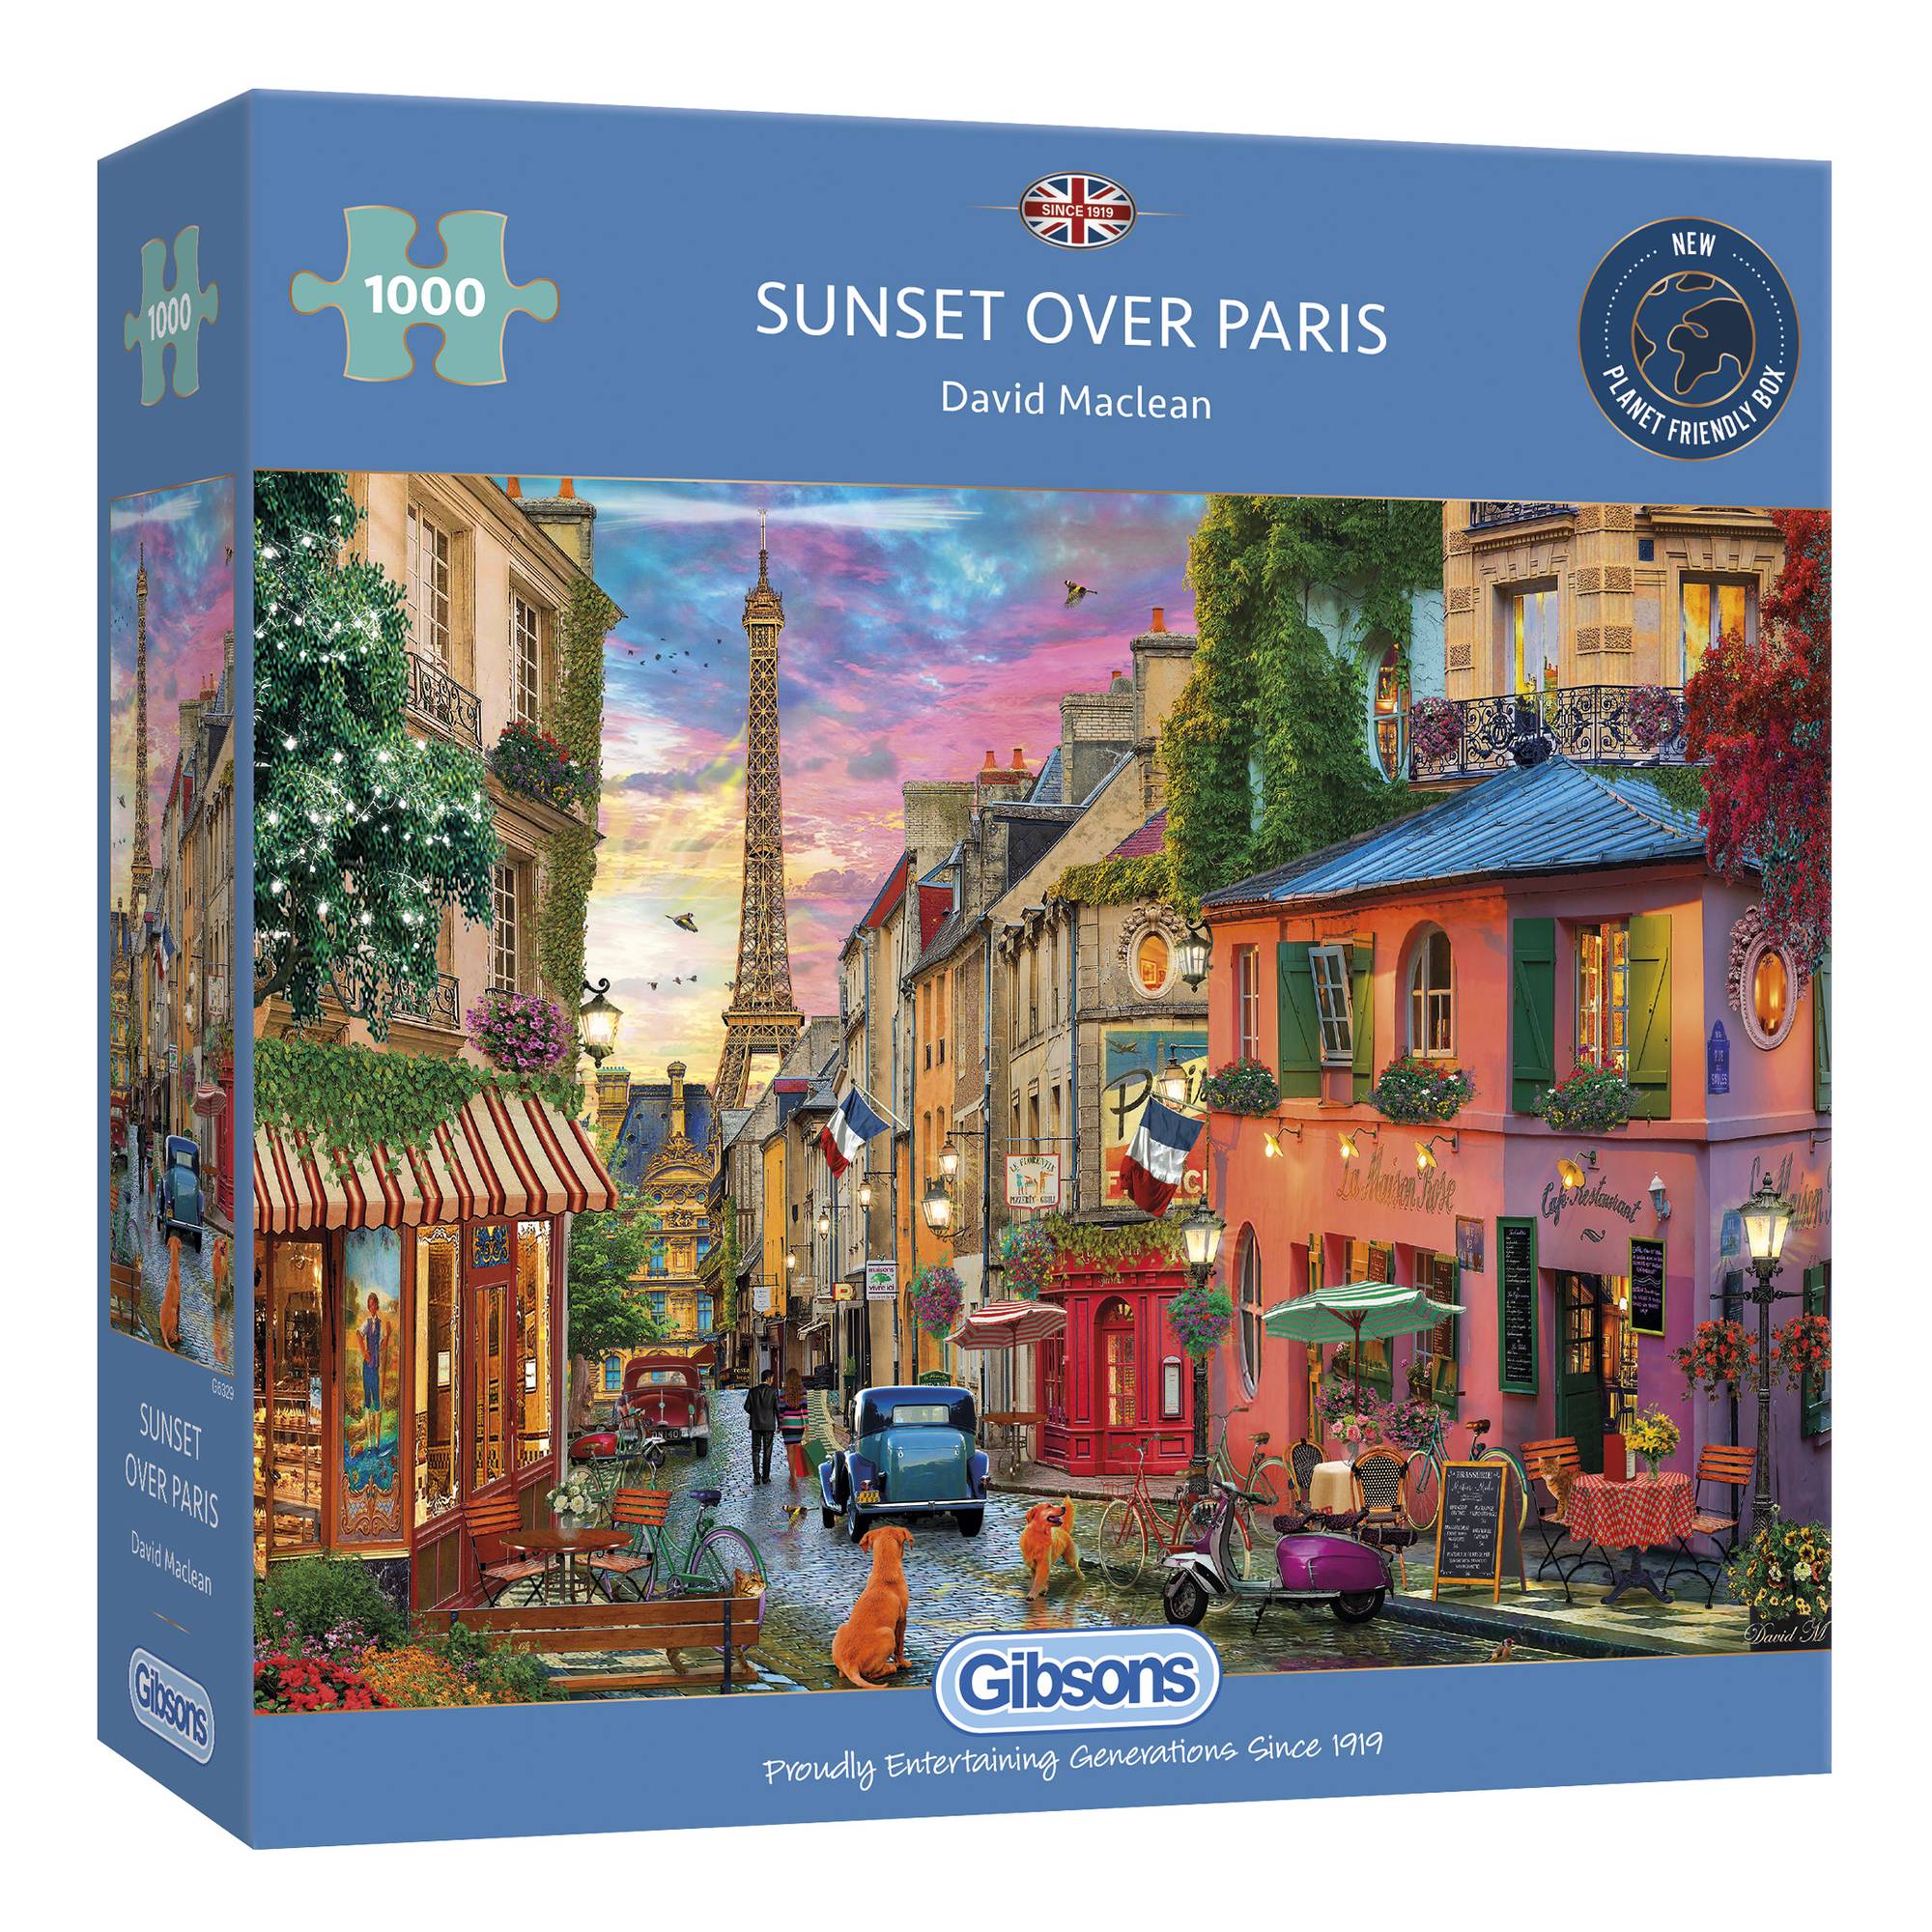 Step puzzle 1000 pieces: Cafe in Paris